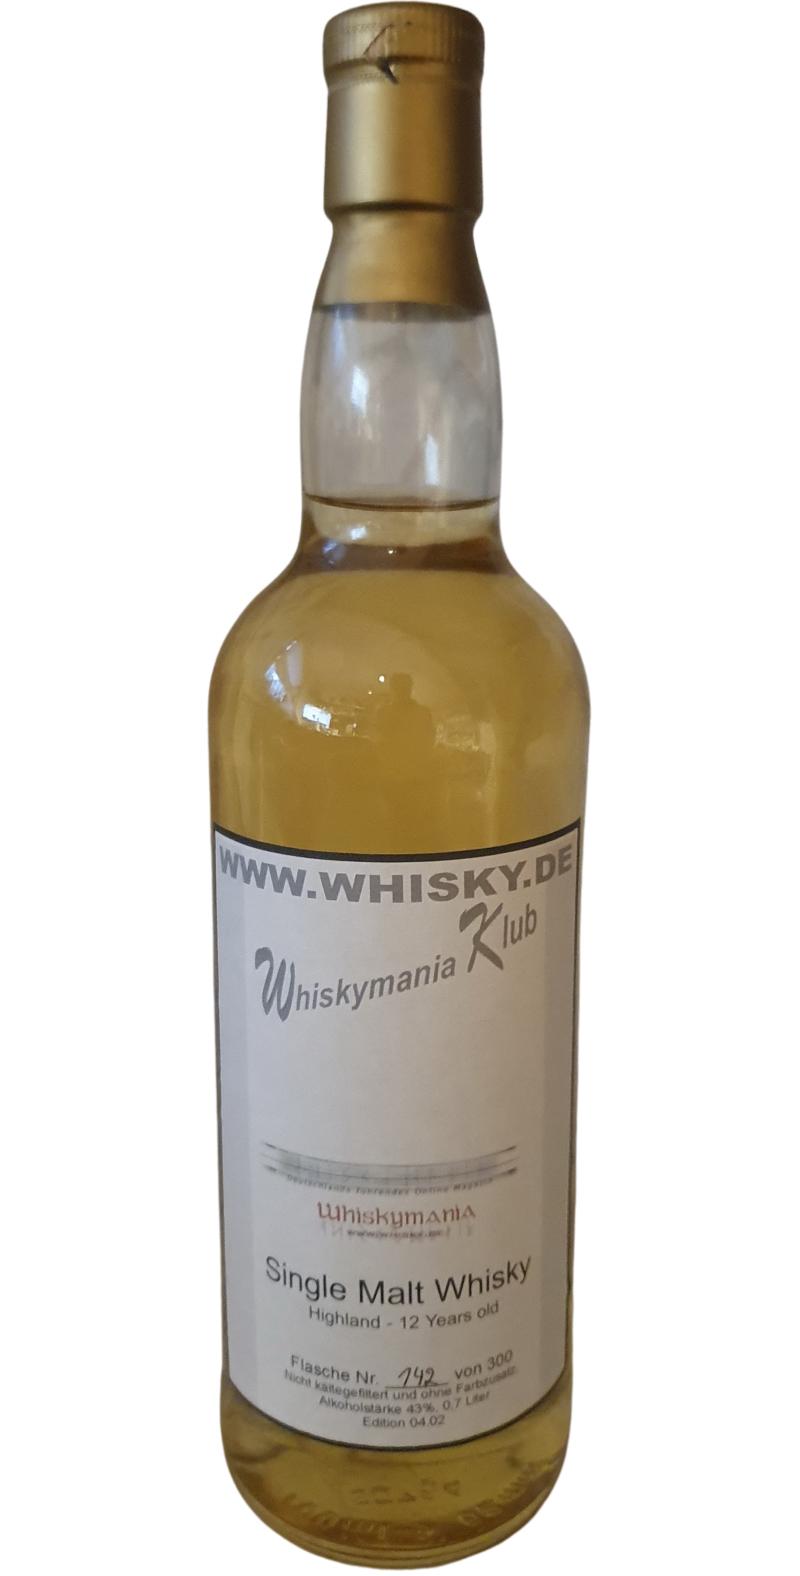 Whiskymania Klub 12yo Highlands Wm.de 43% 700ml